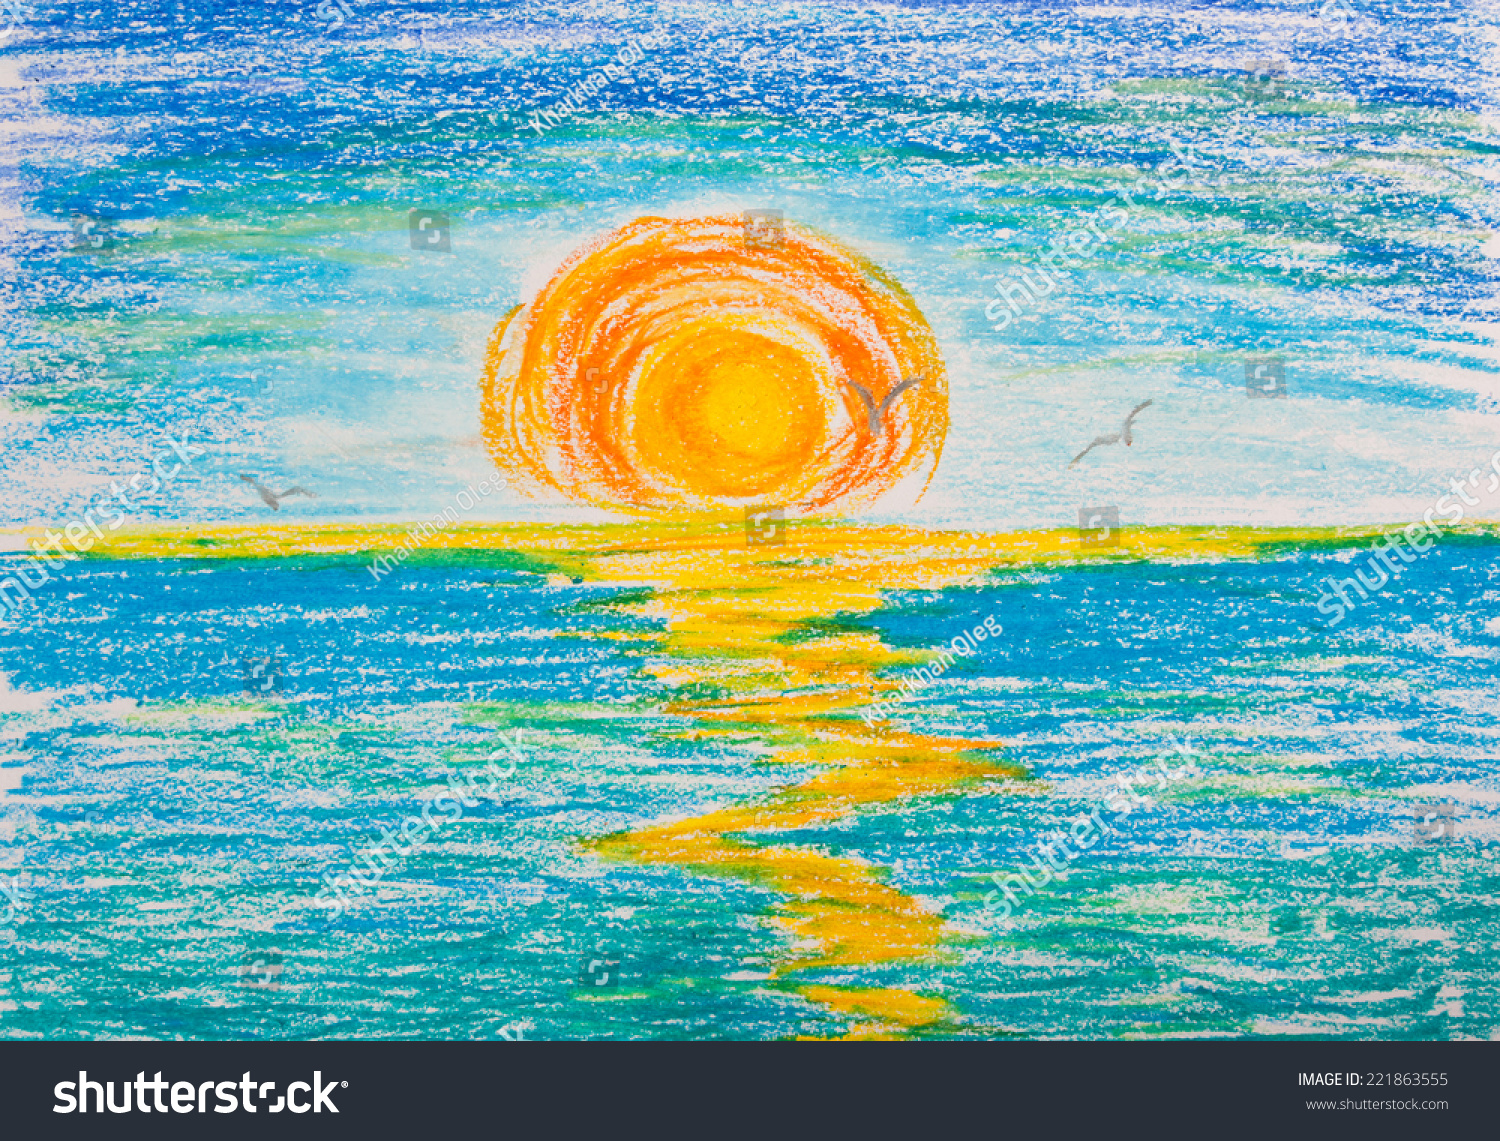 Солнце на море цветные карандаши